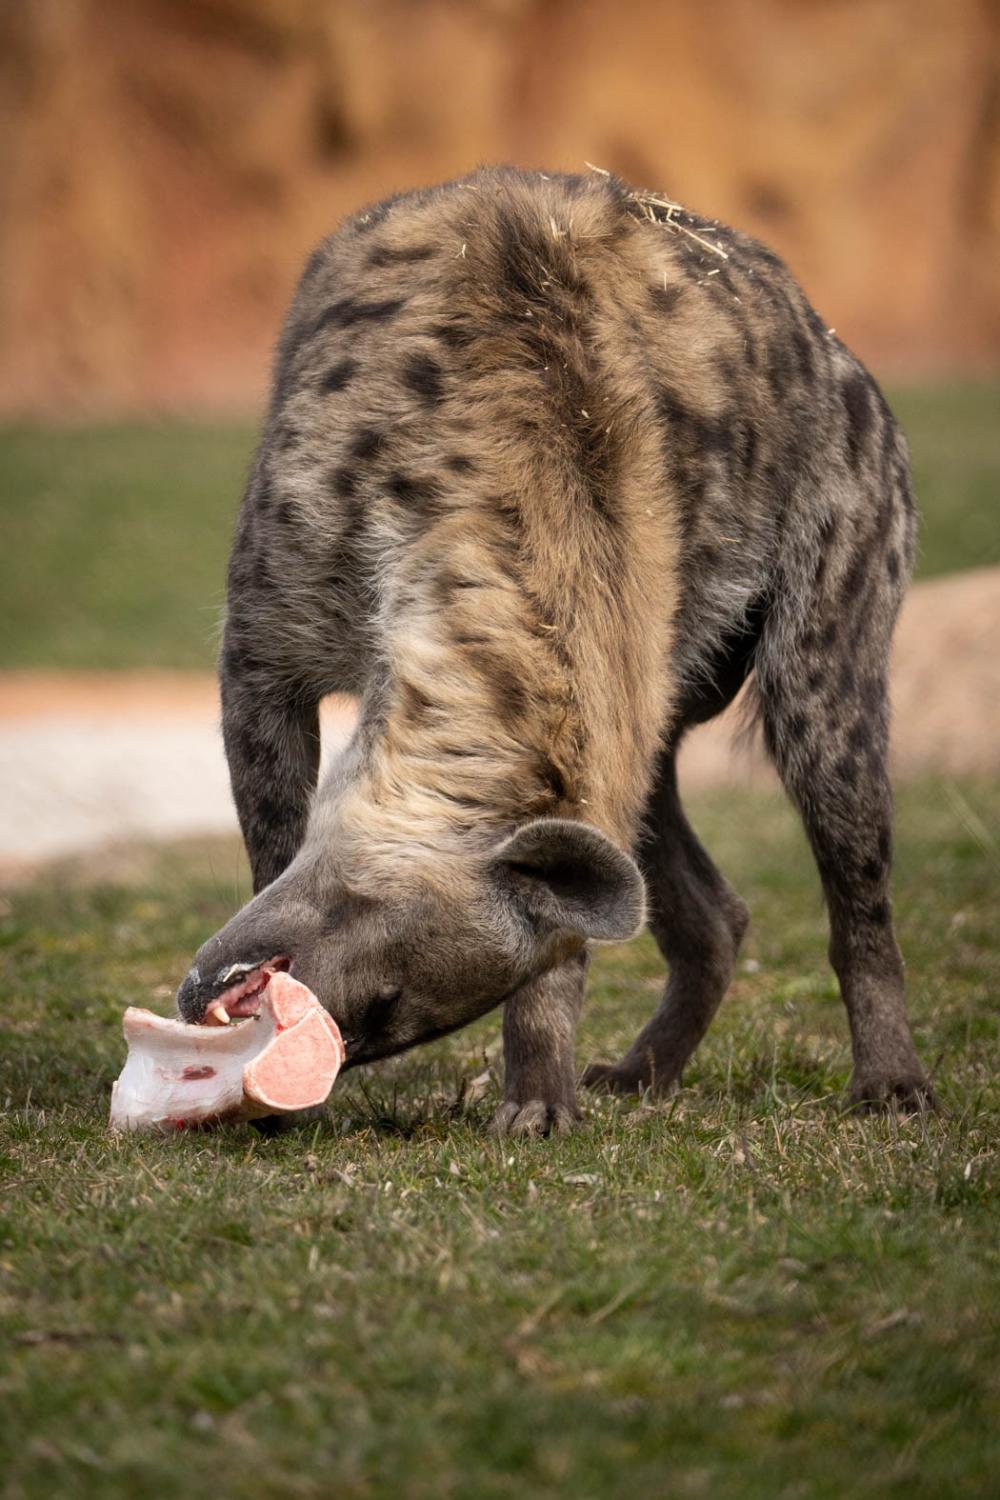 hyena chewing on animal bone